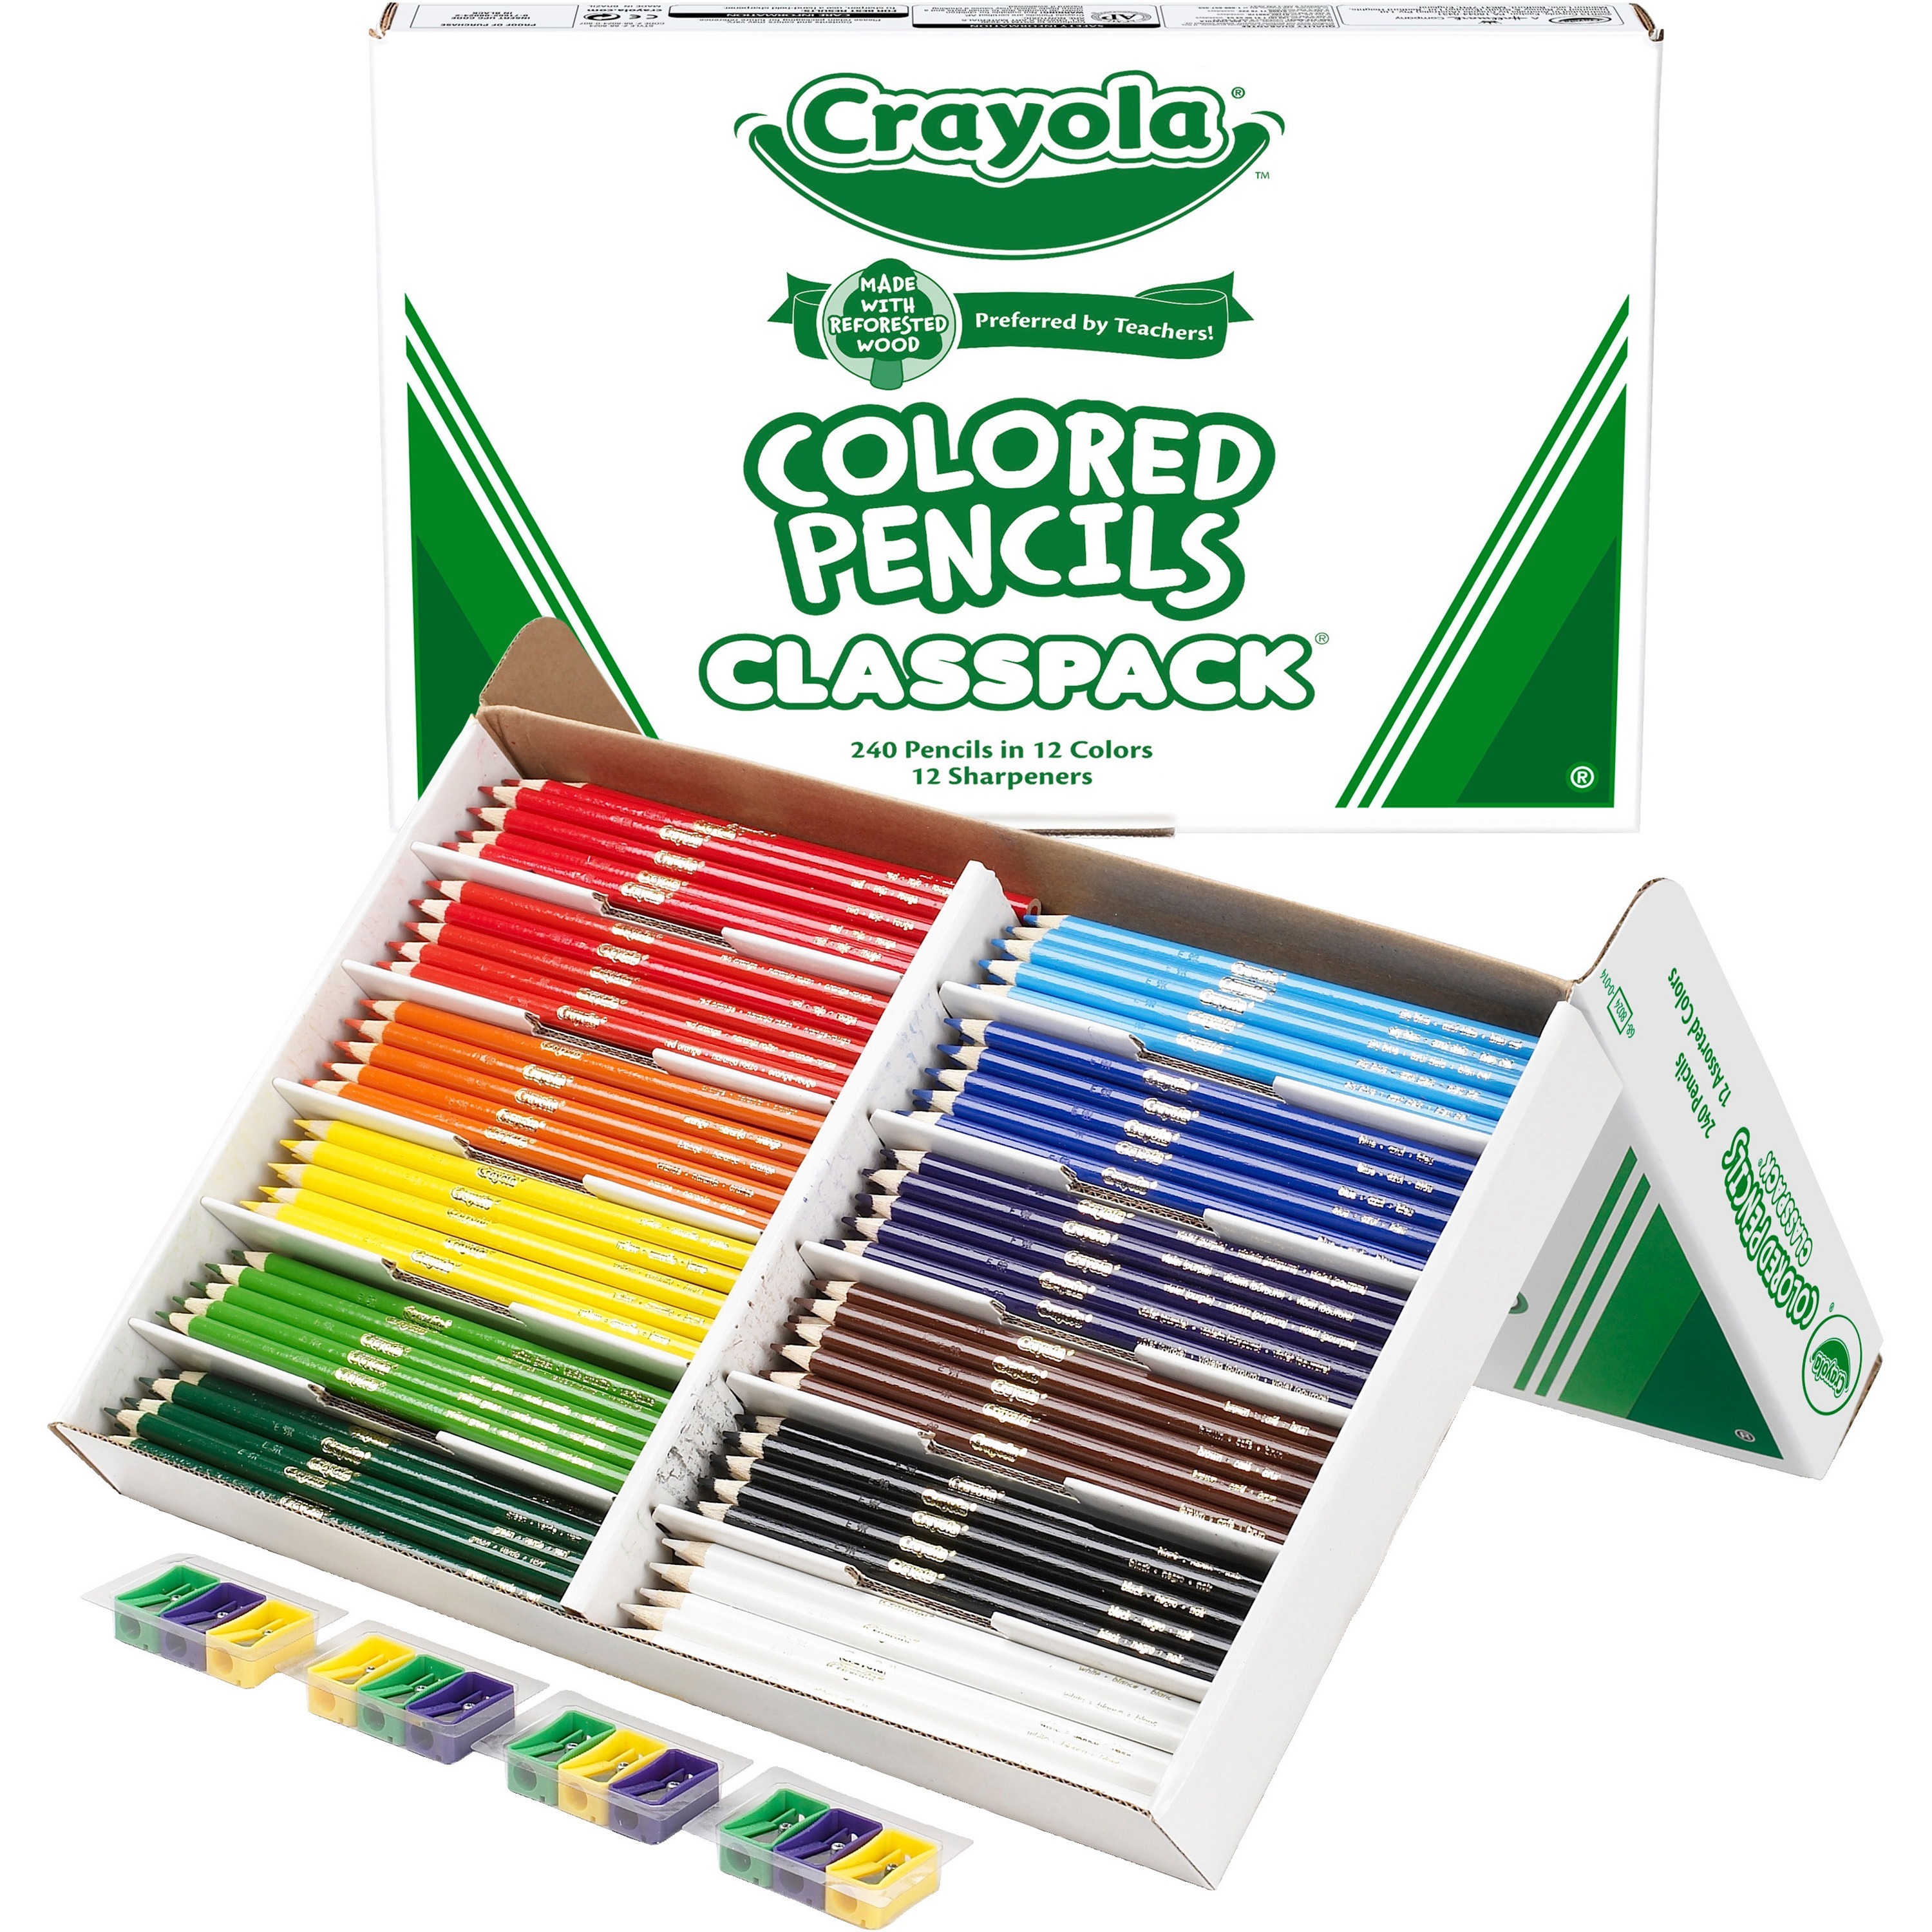 Marker Classpack, 200 Count Classroom Supplies, Crayola.com